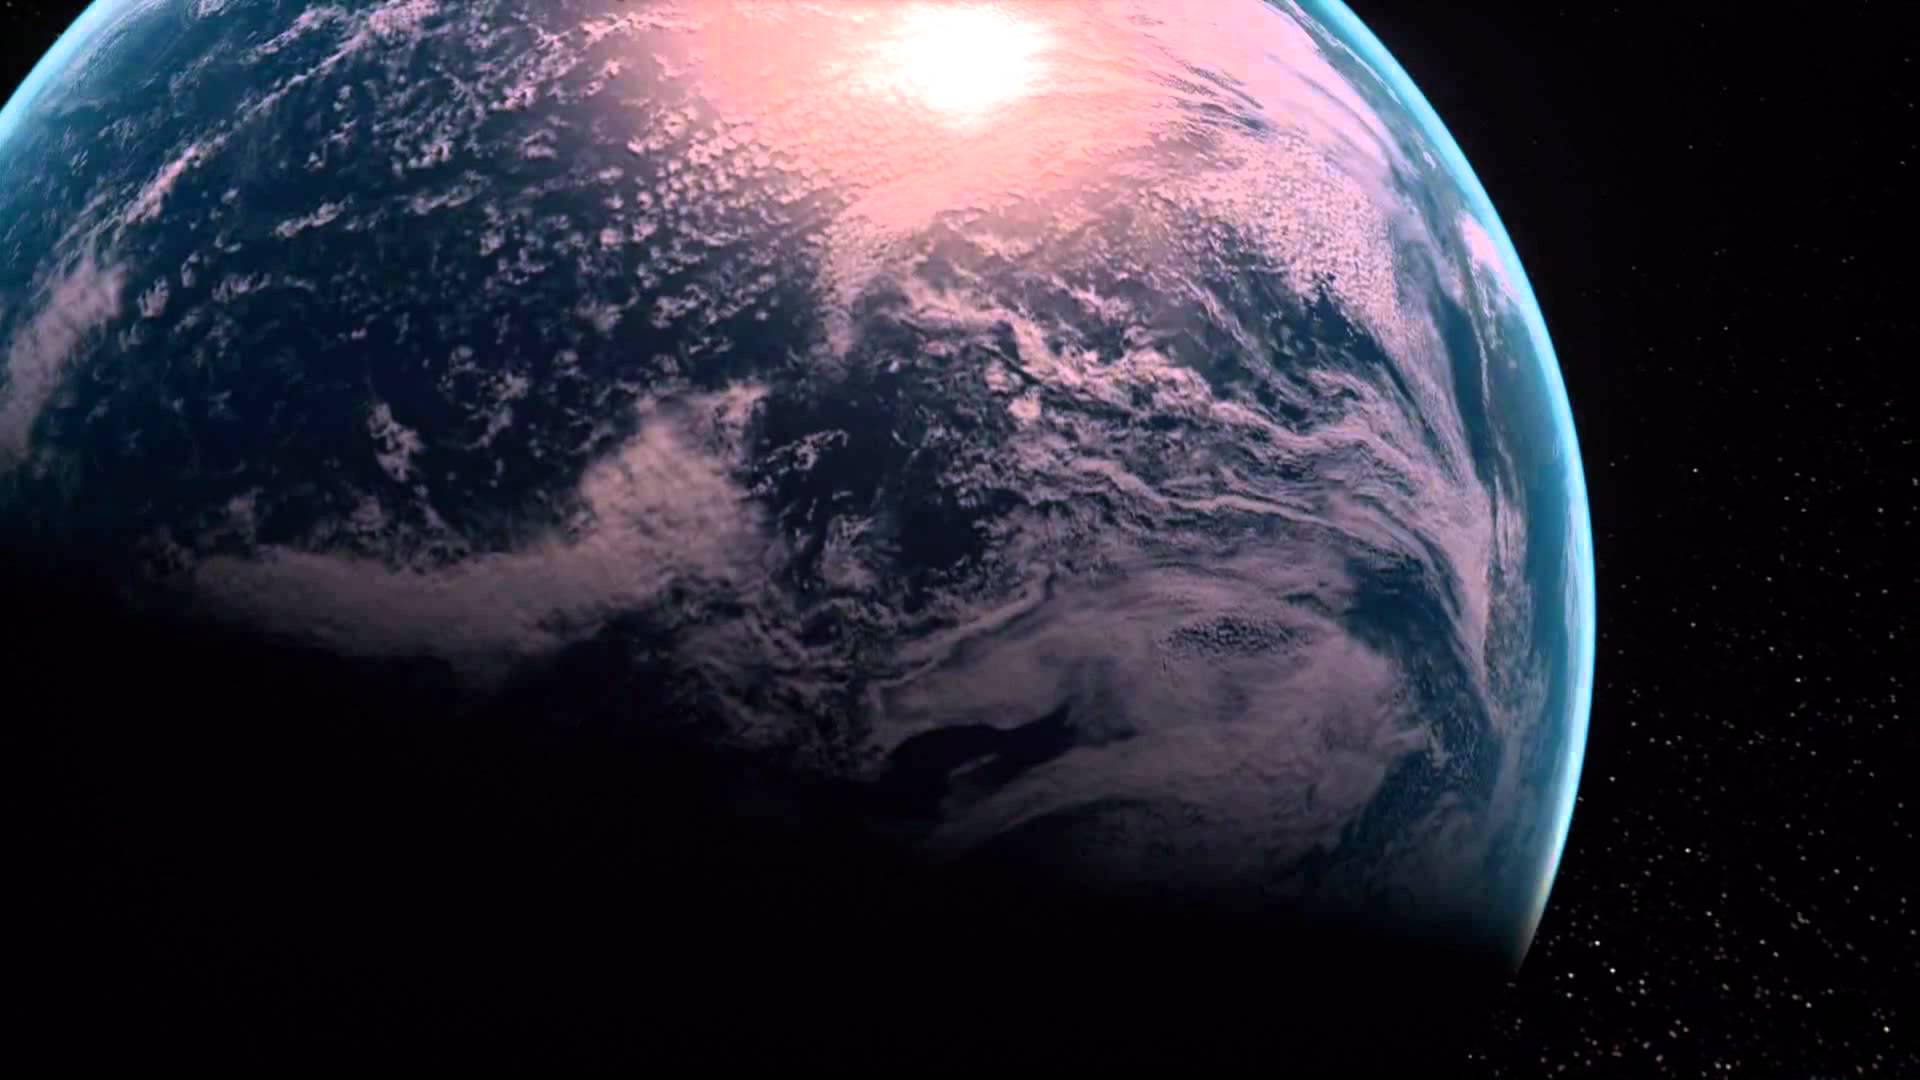 NASA: Υπερσύγχρονο σύστημα φωτογράφισης κατέγραψε μια εικόνα σπάνιας ομορφιάς (φωτό)